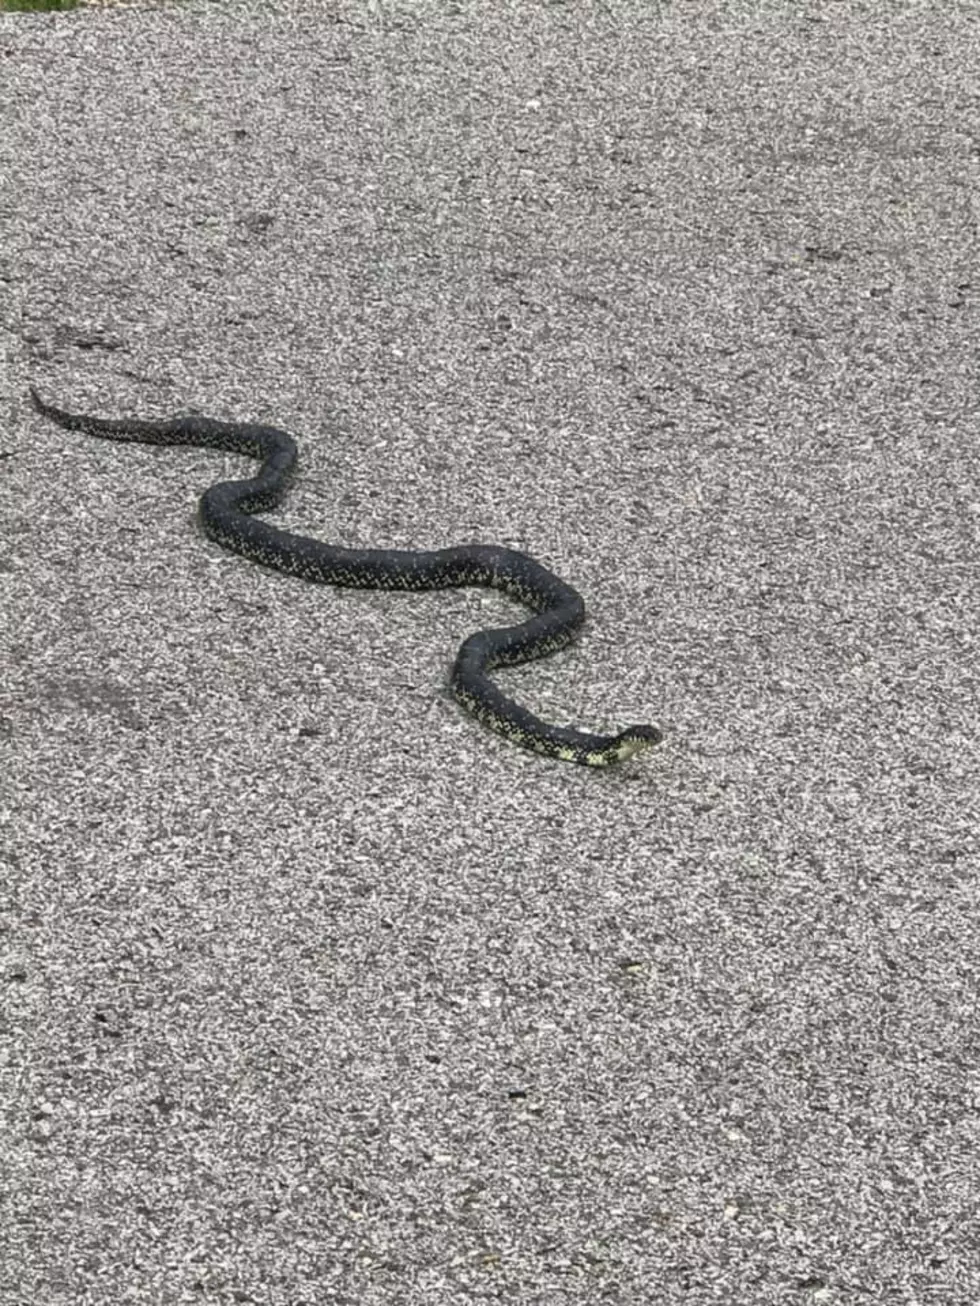 When I Screamed &#8220;Snake!!&#8221; at My Running Partner on the Greenbelt [Video]